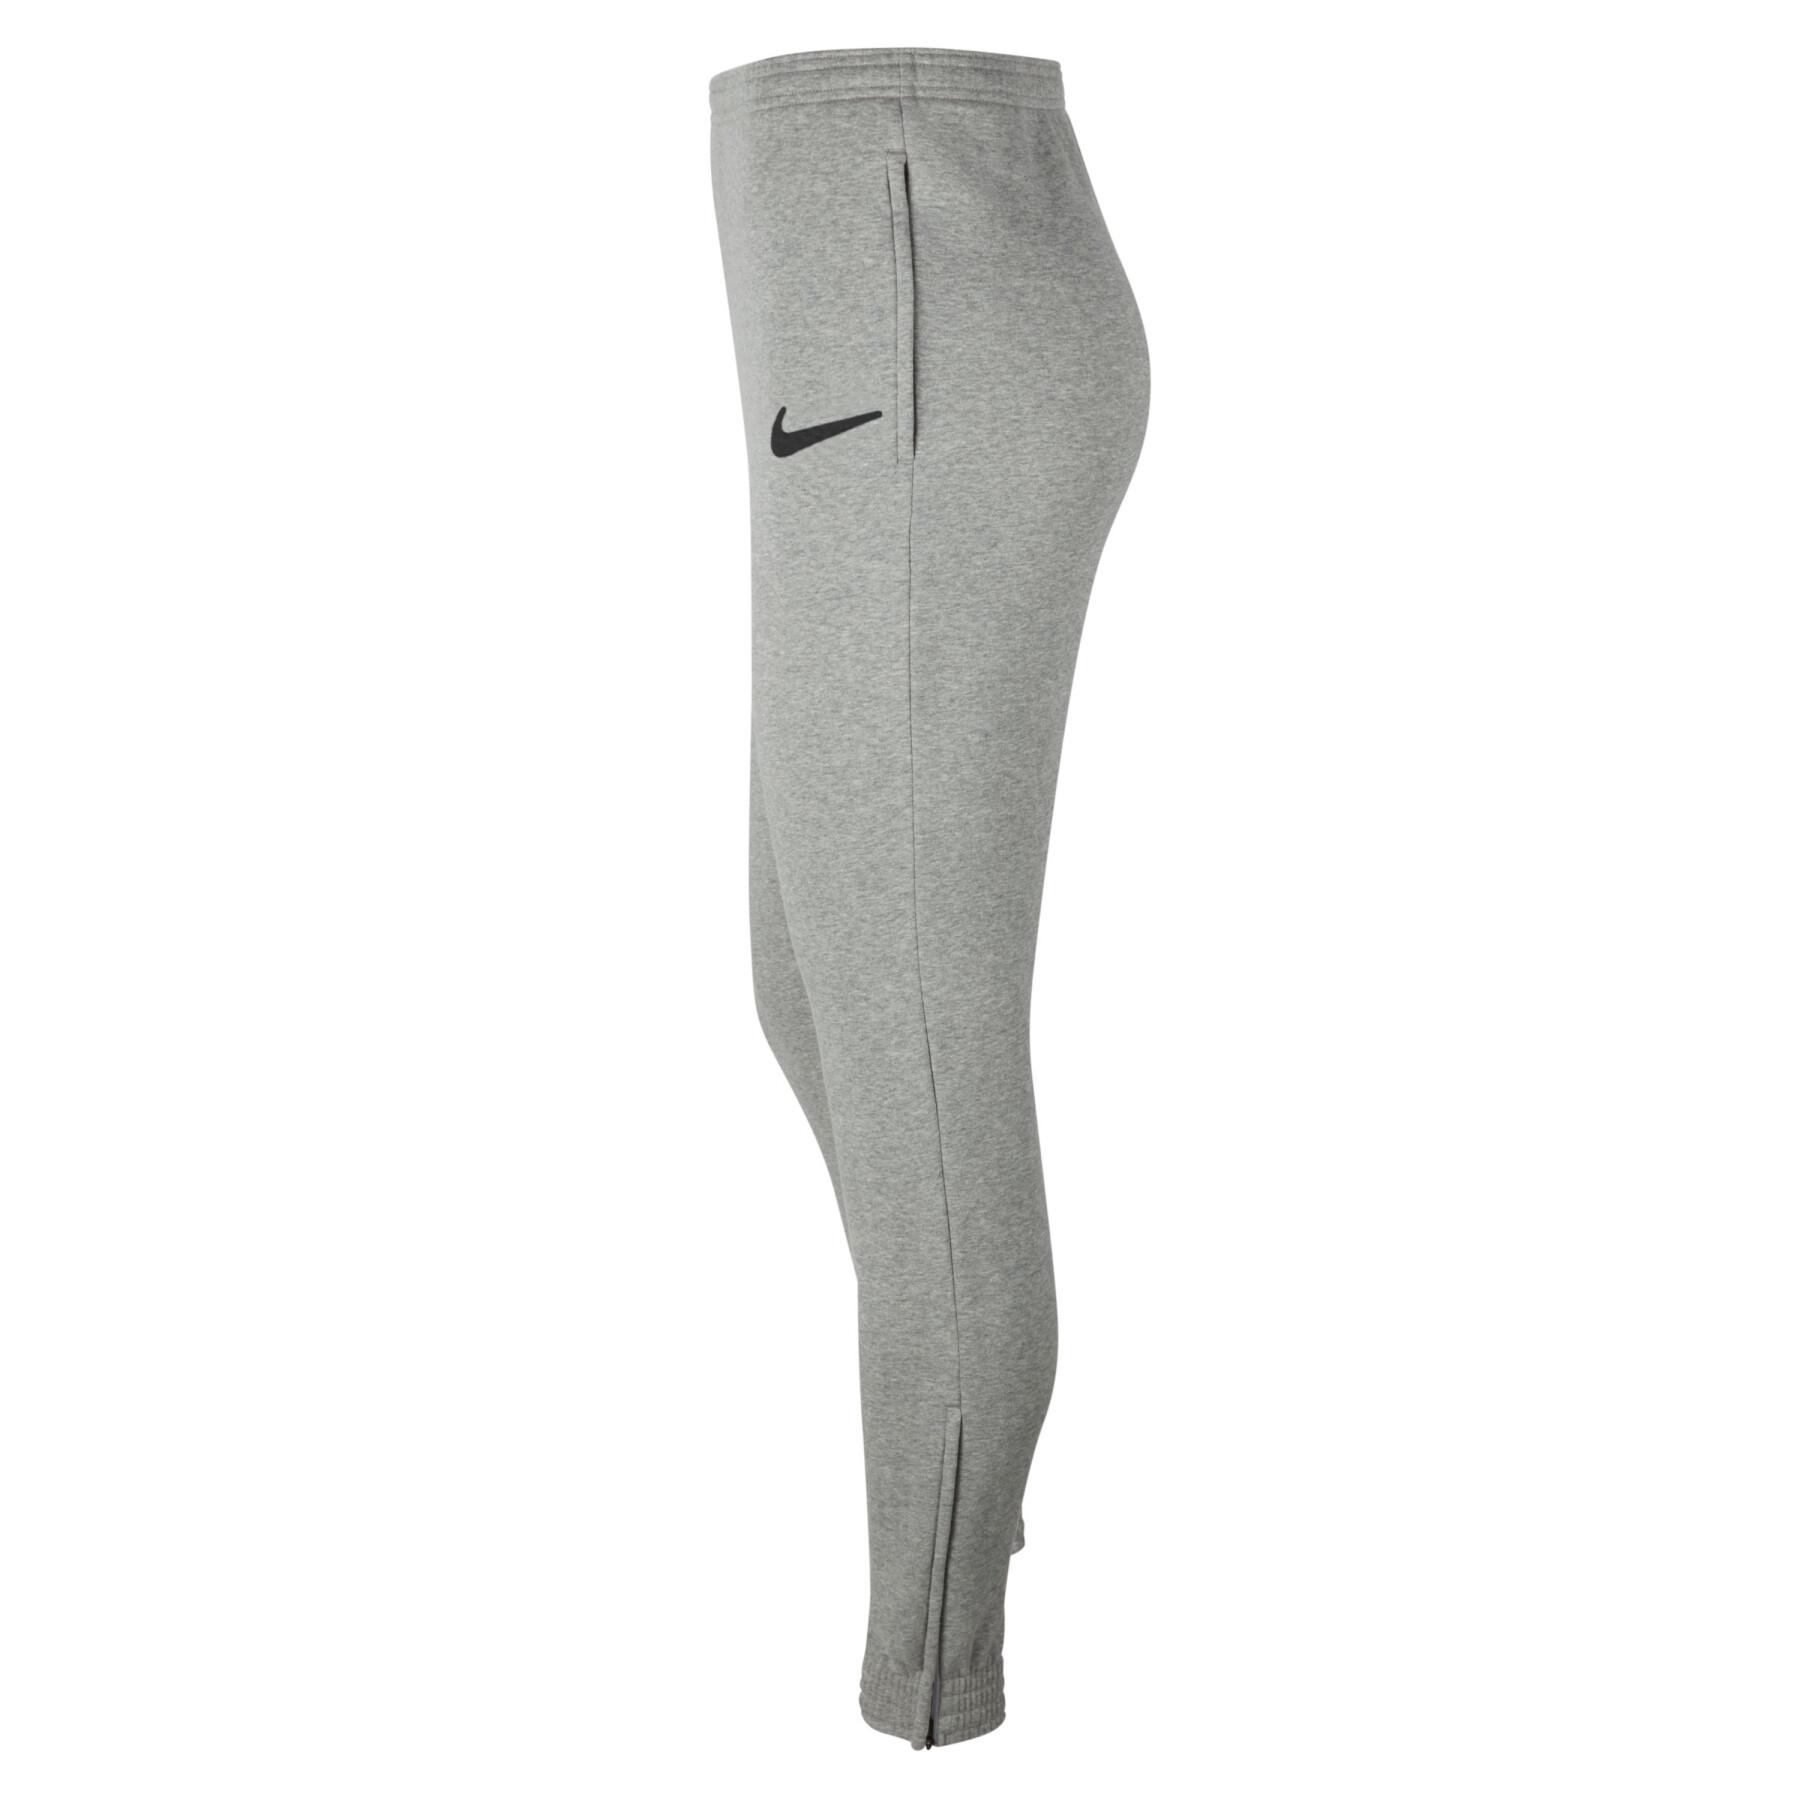 Pants Nike Fleece Park20